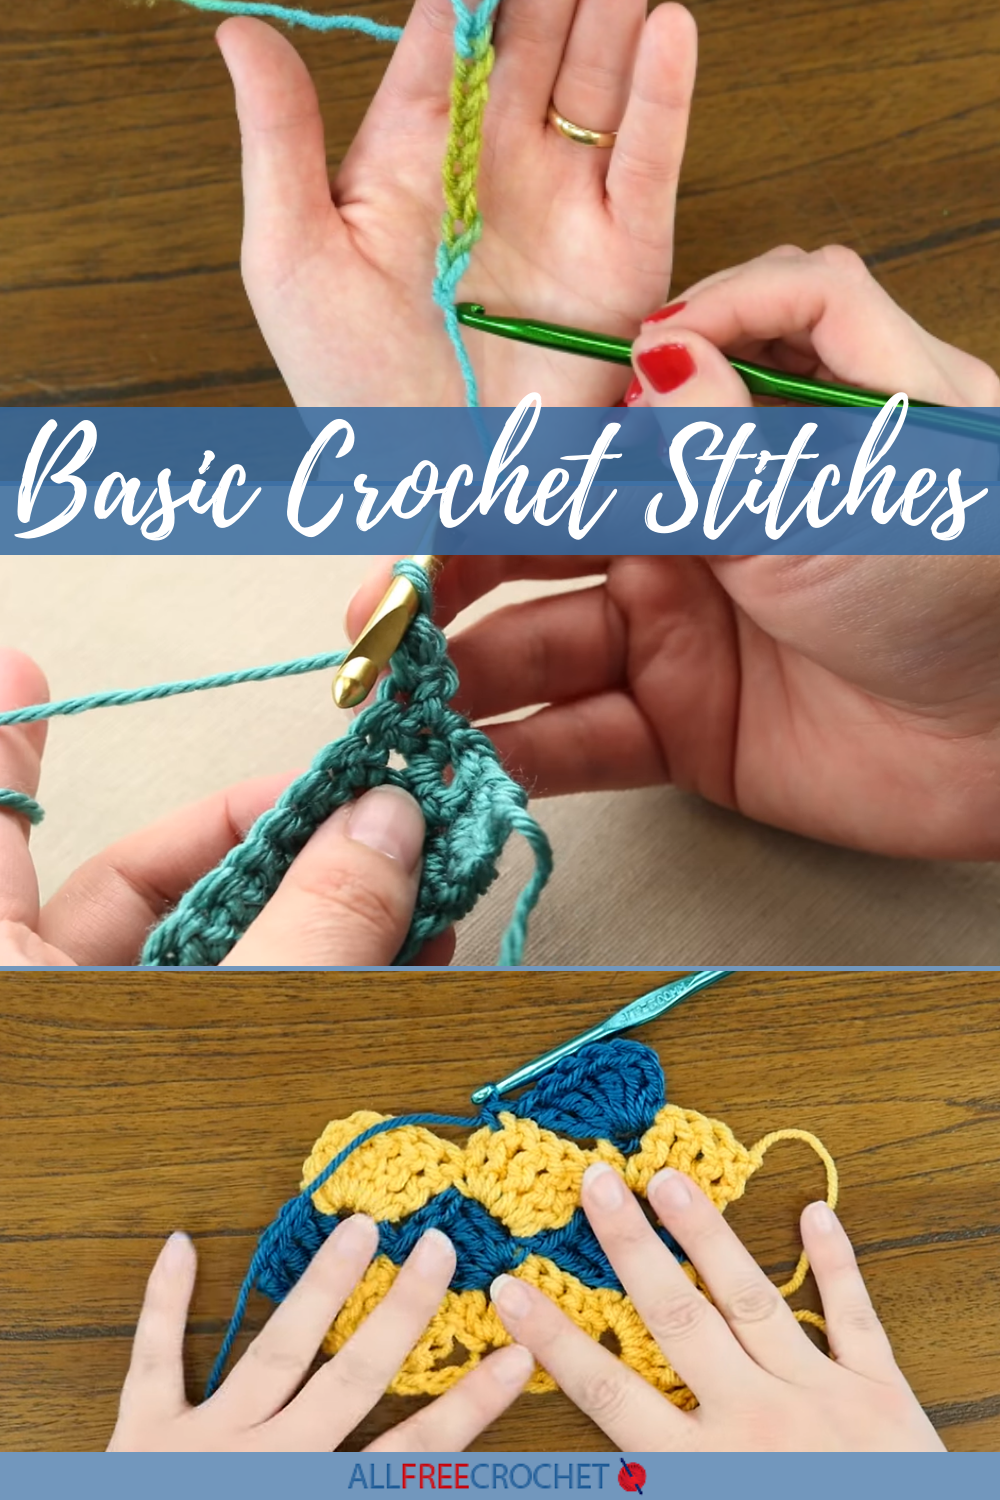 101 Free Crochet Patterns - Full Instructions for Beginners  Crochet  stitches for beginners, Crochet stitches diagram, Crochet patterns